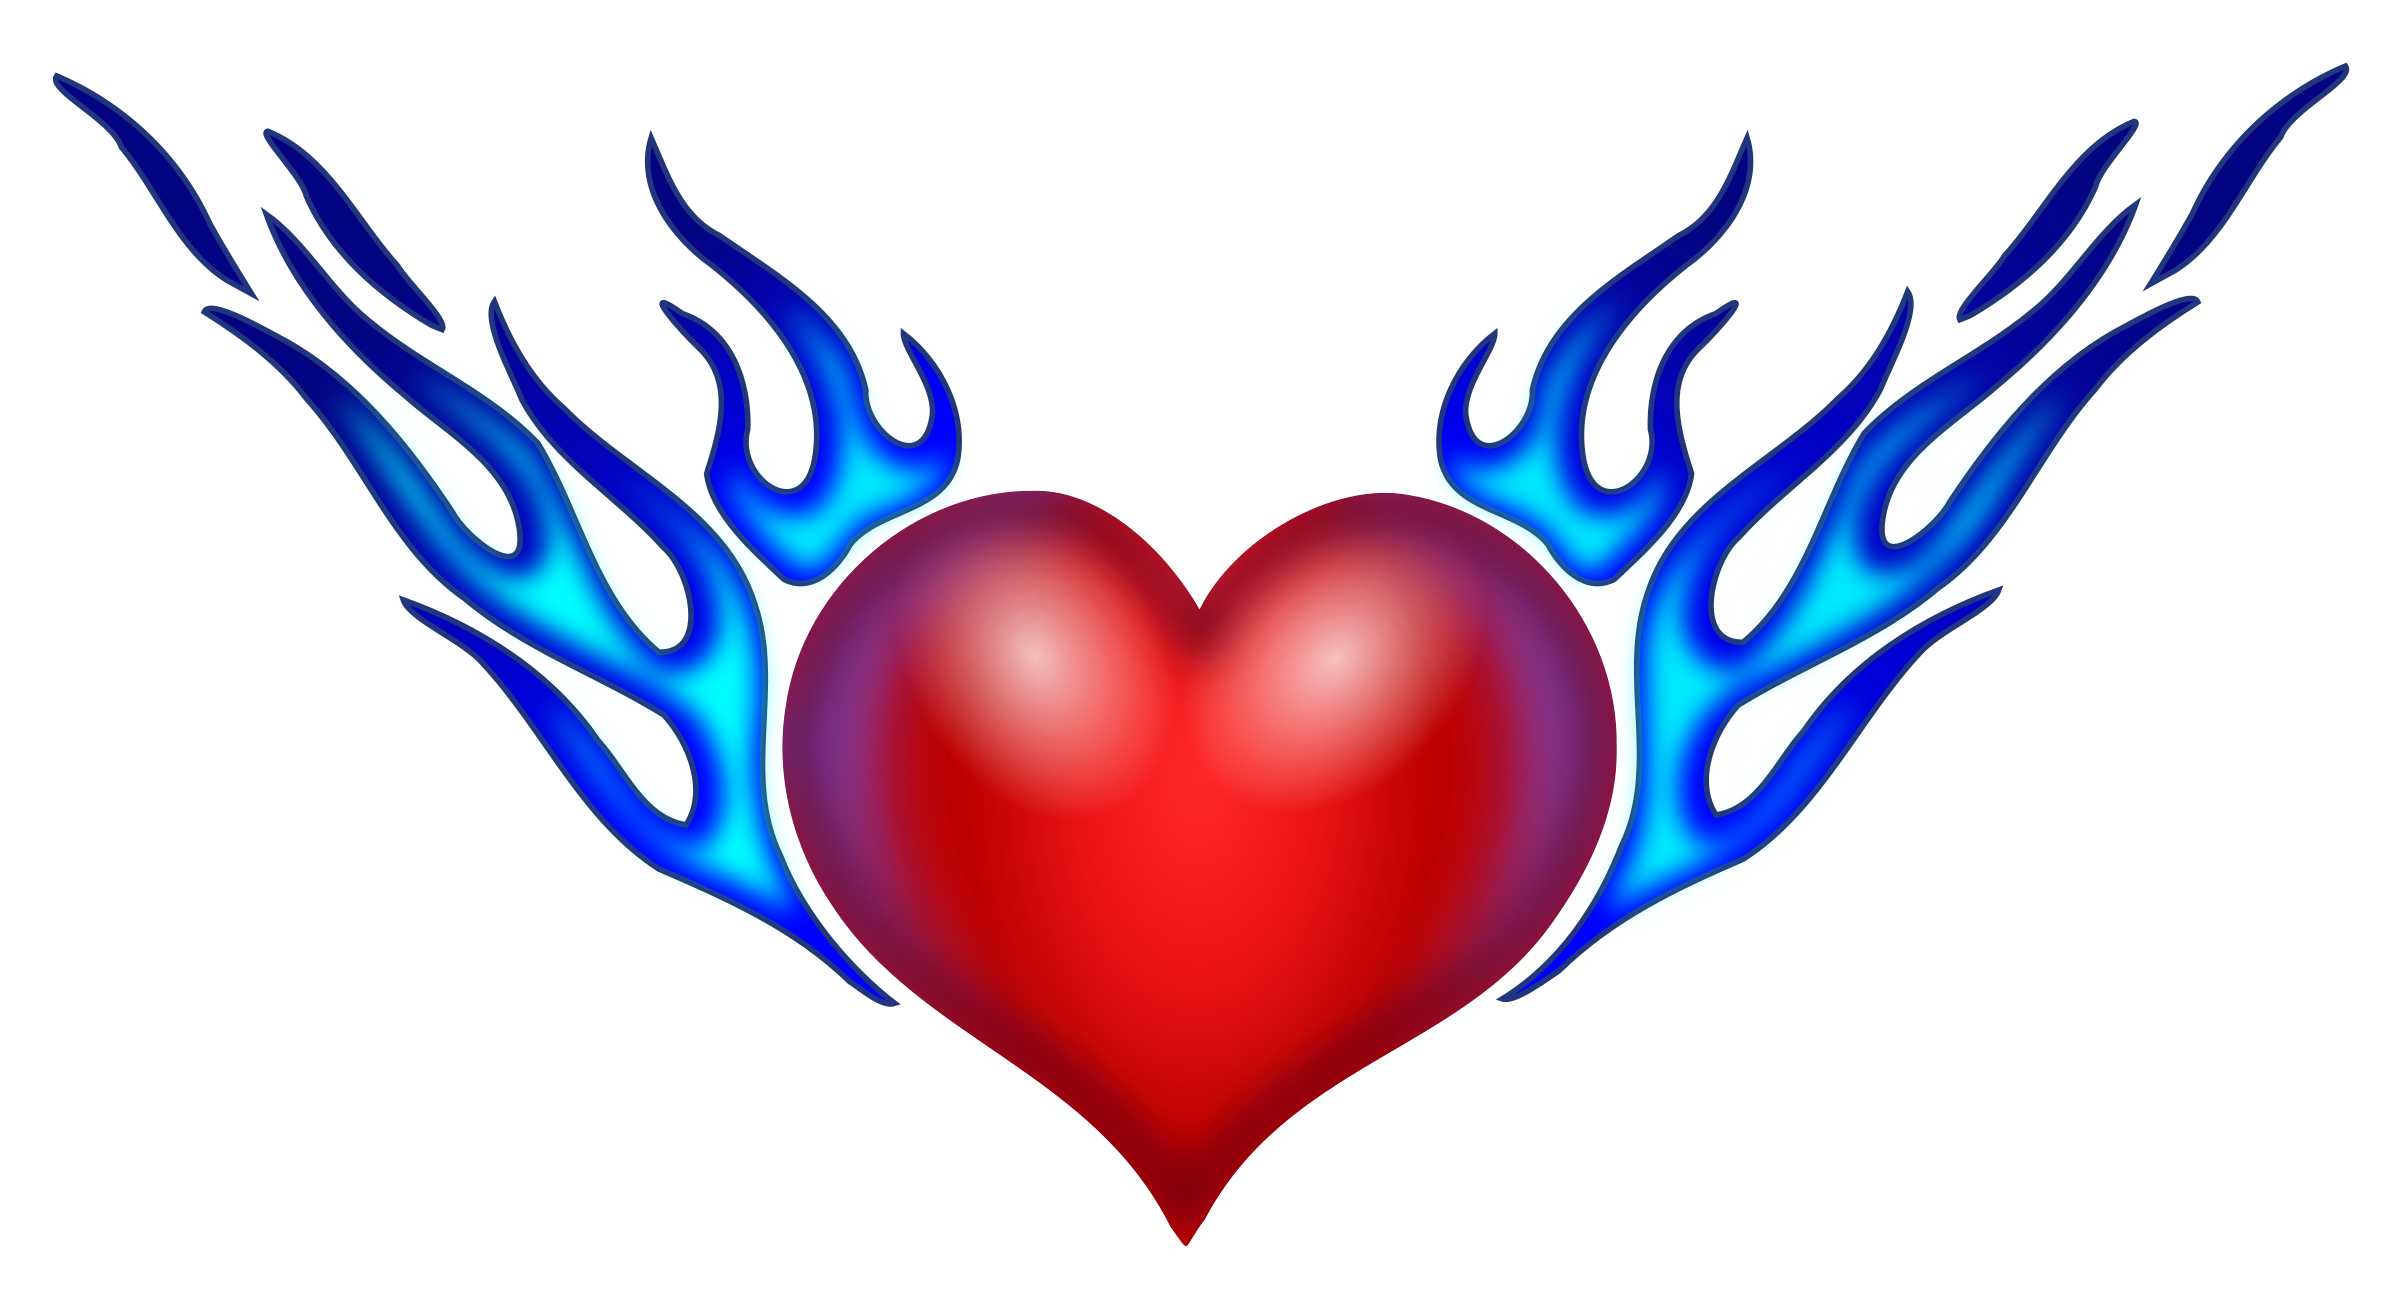 Download Burning Heart Vector Art image - Free stock photo - Public ...